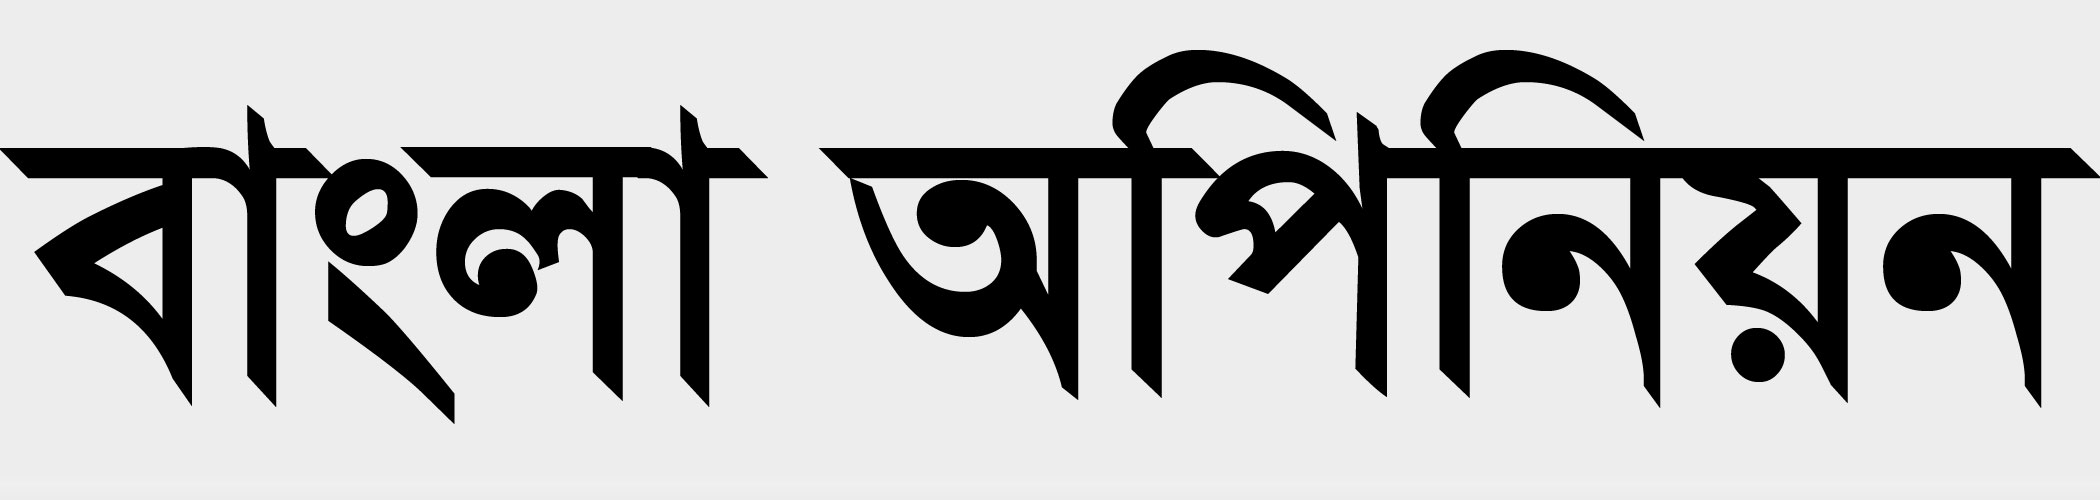 Banglaopinion-new-logo.